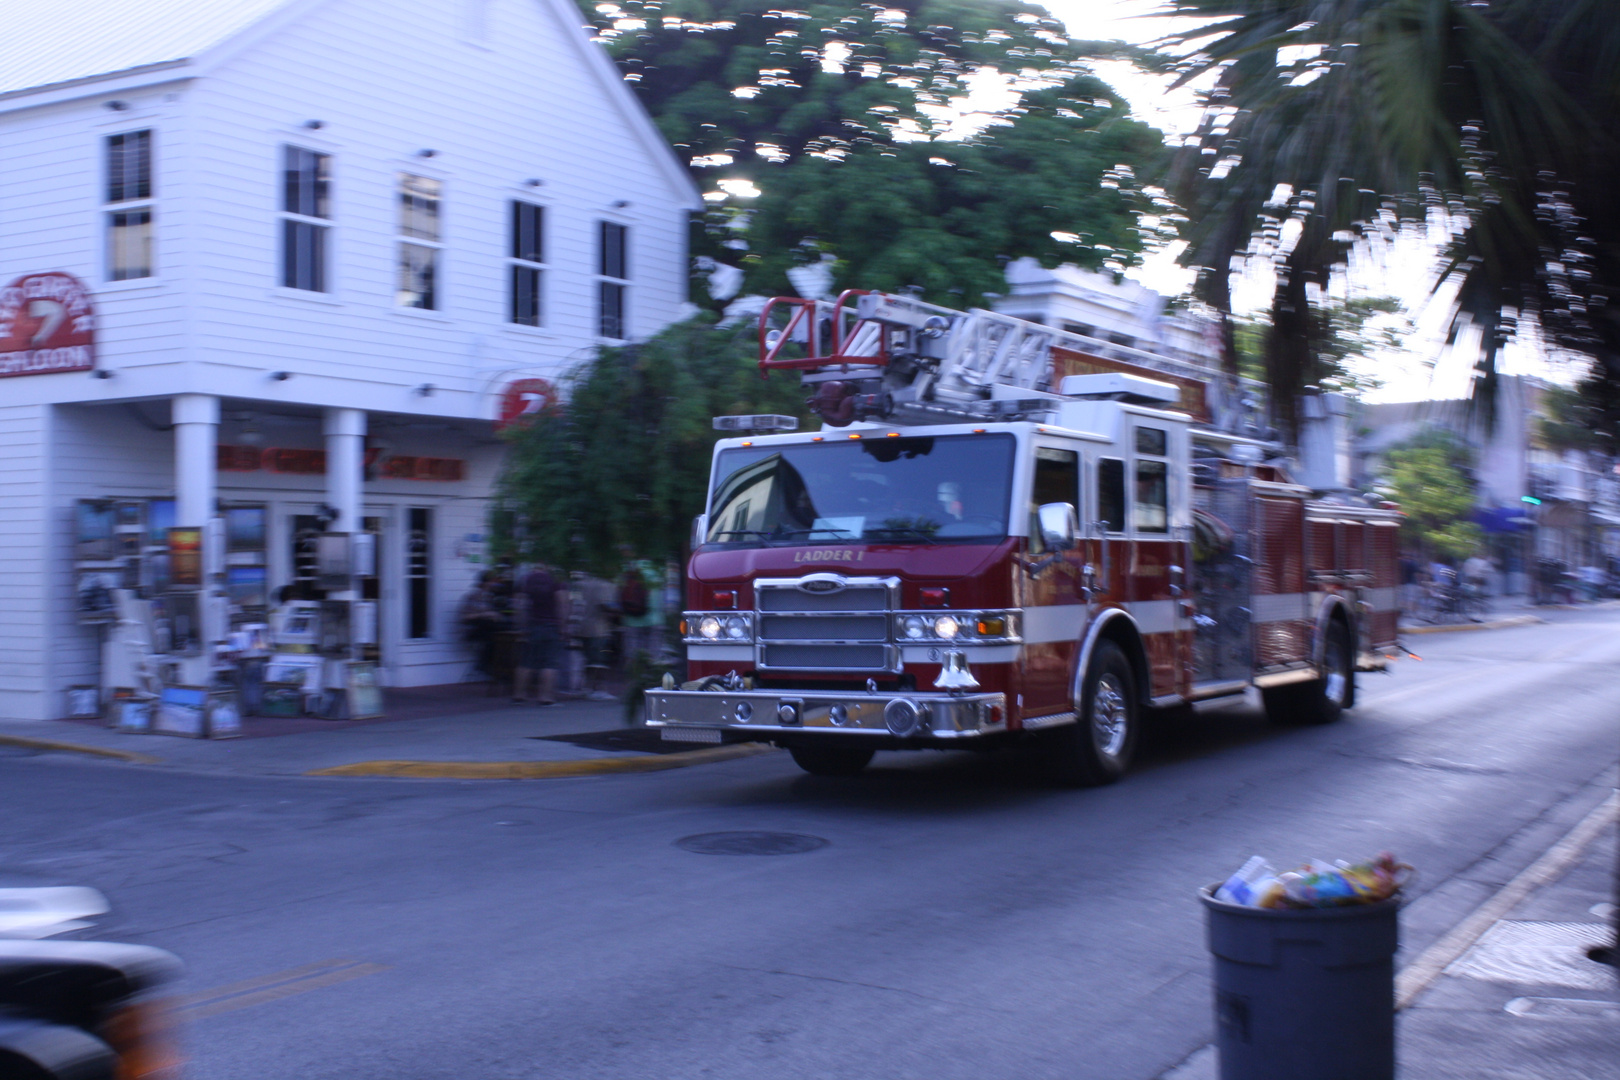 Key West Fire Department Ladder 1